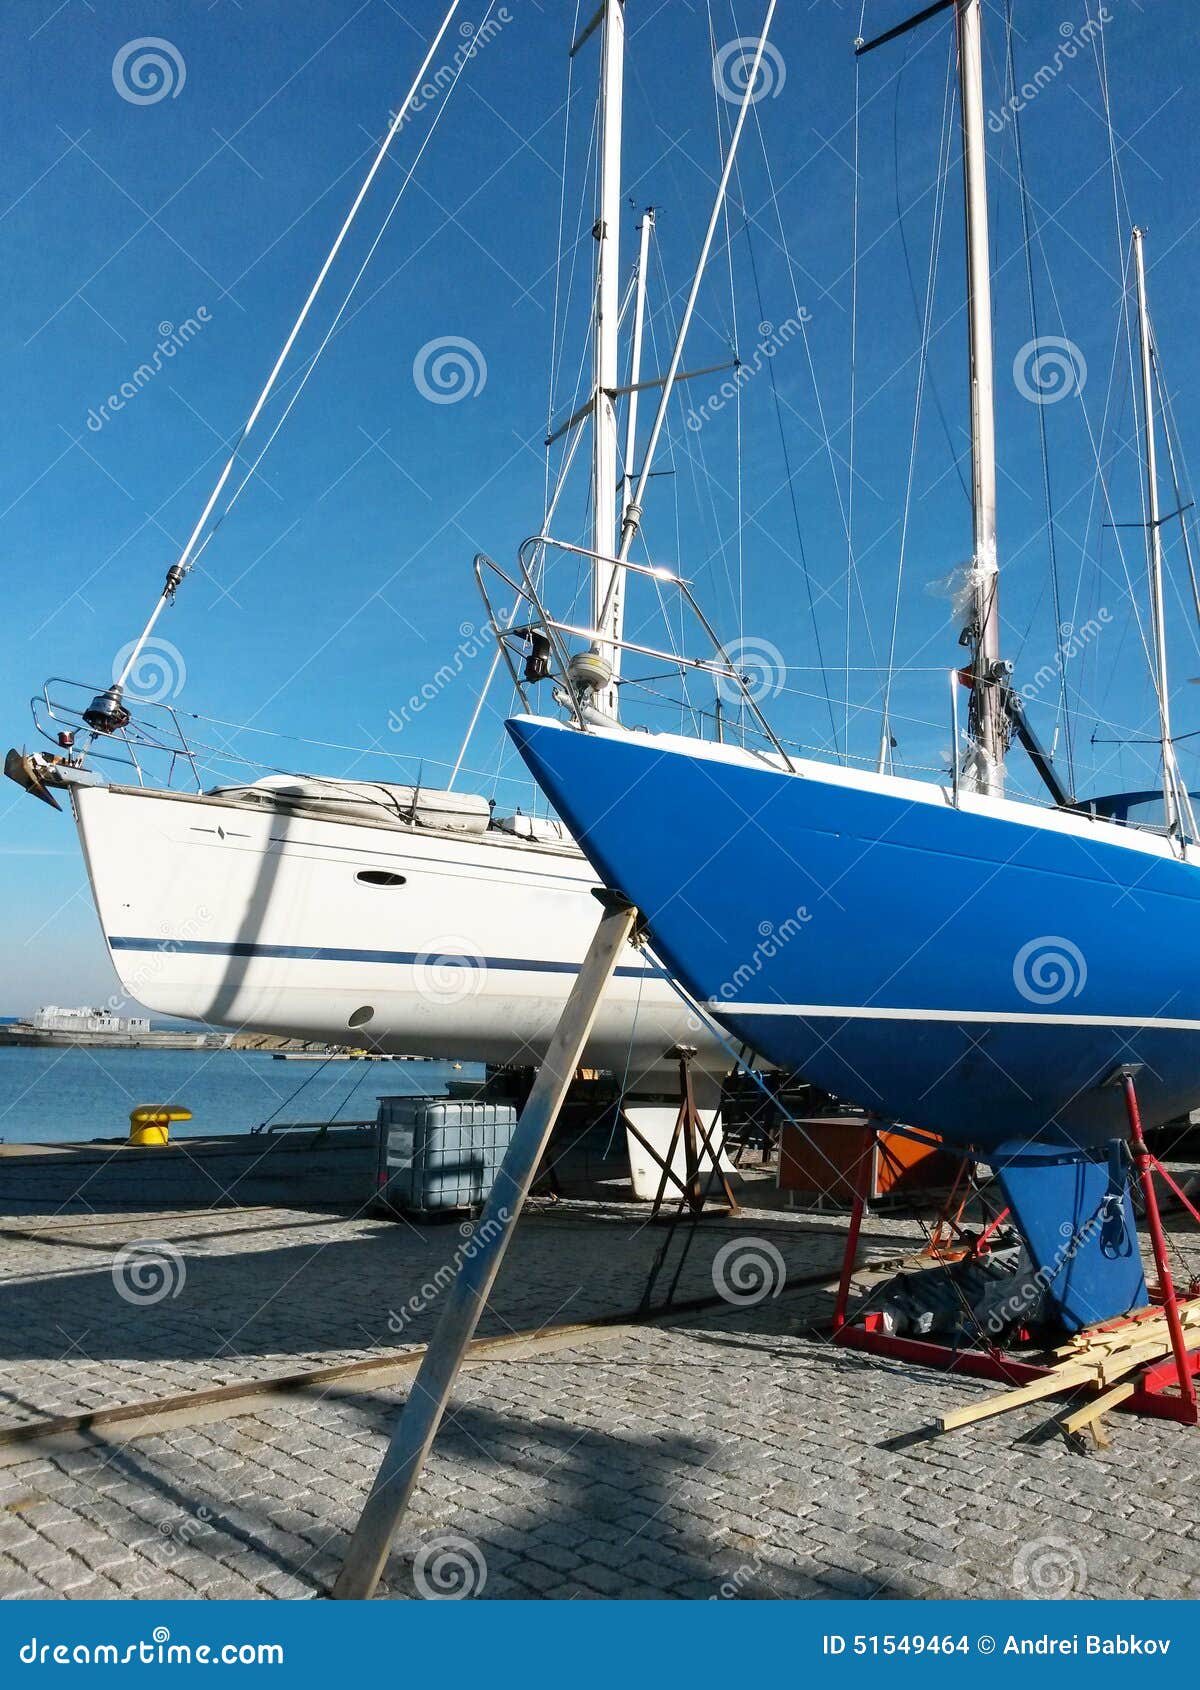 dry dock sailboat